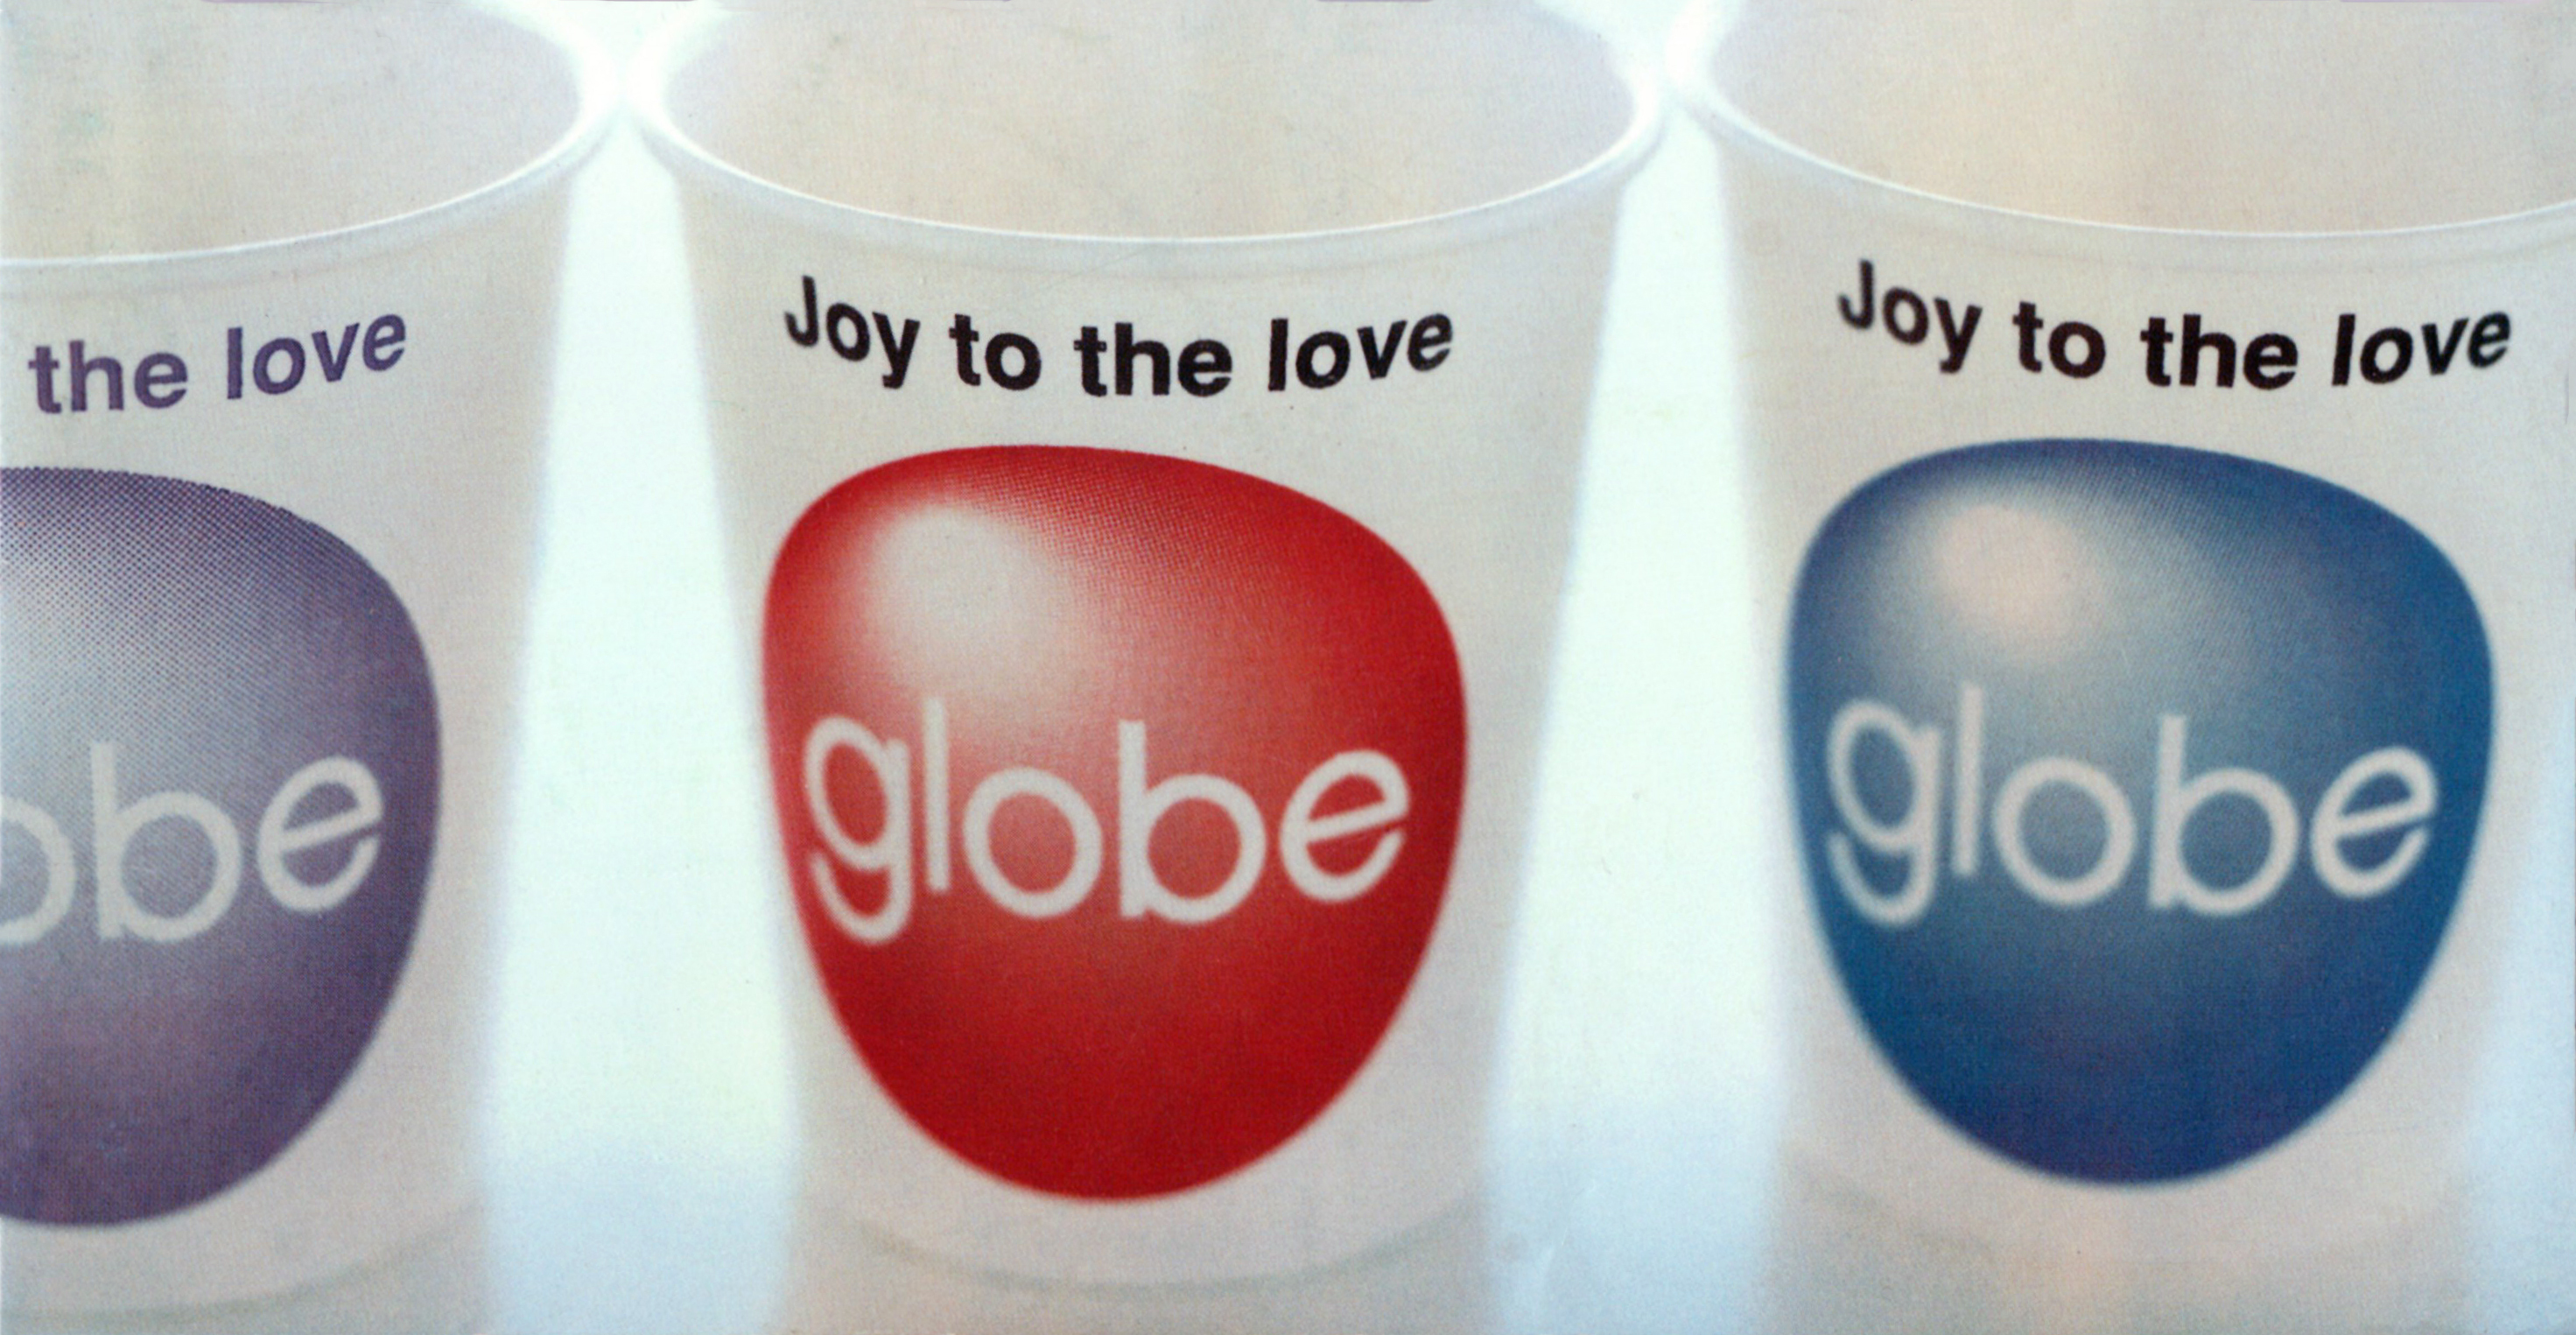 globe (グローブ) 2ndシングル『Joy to the love (globe)』(1995年9月27日発売) 高画質CDジャケット画像 (ジャケ写)